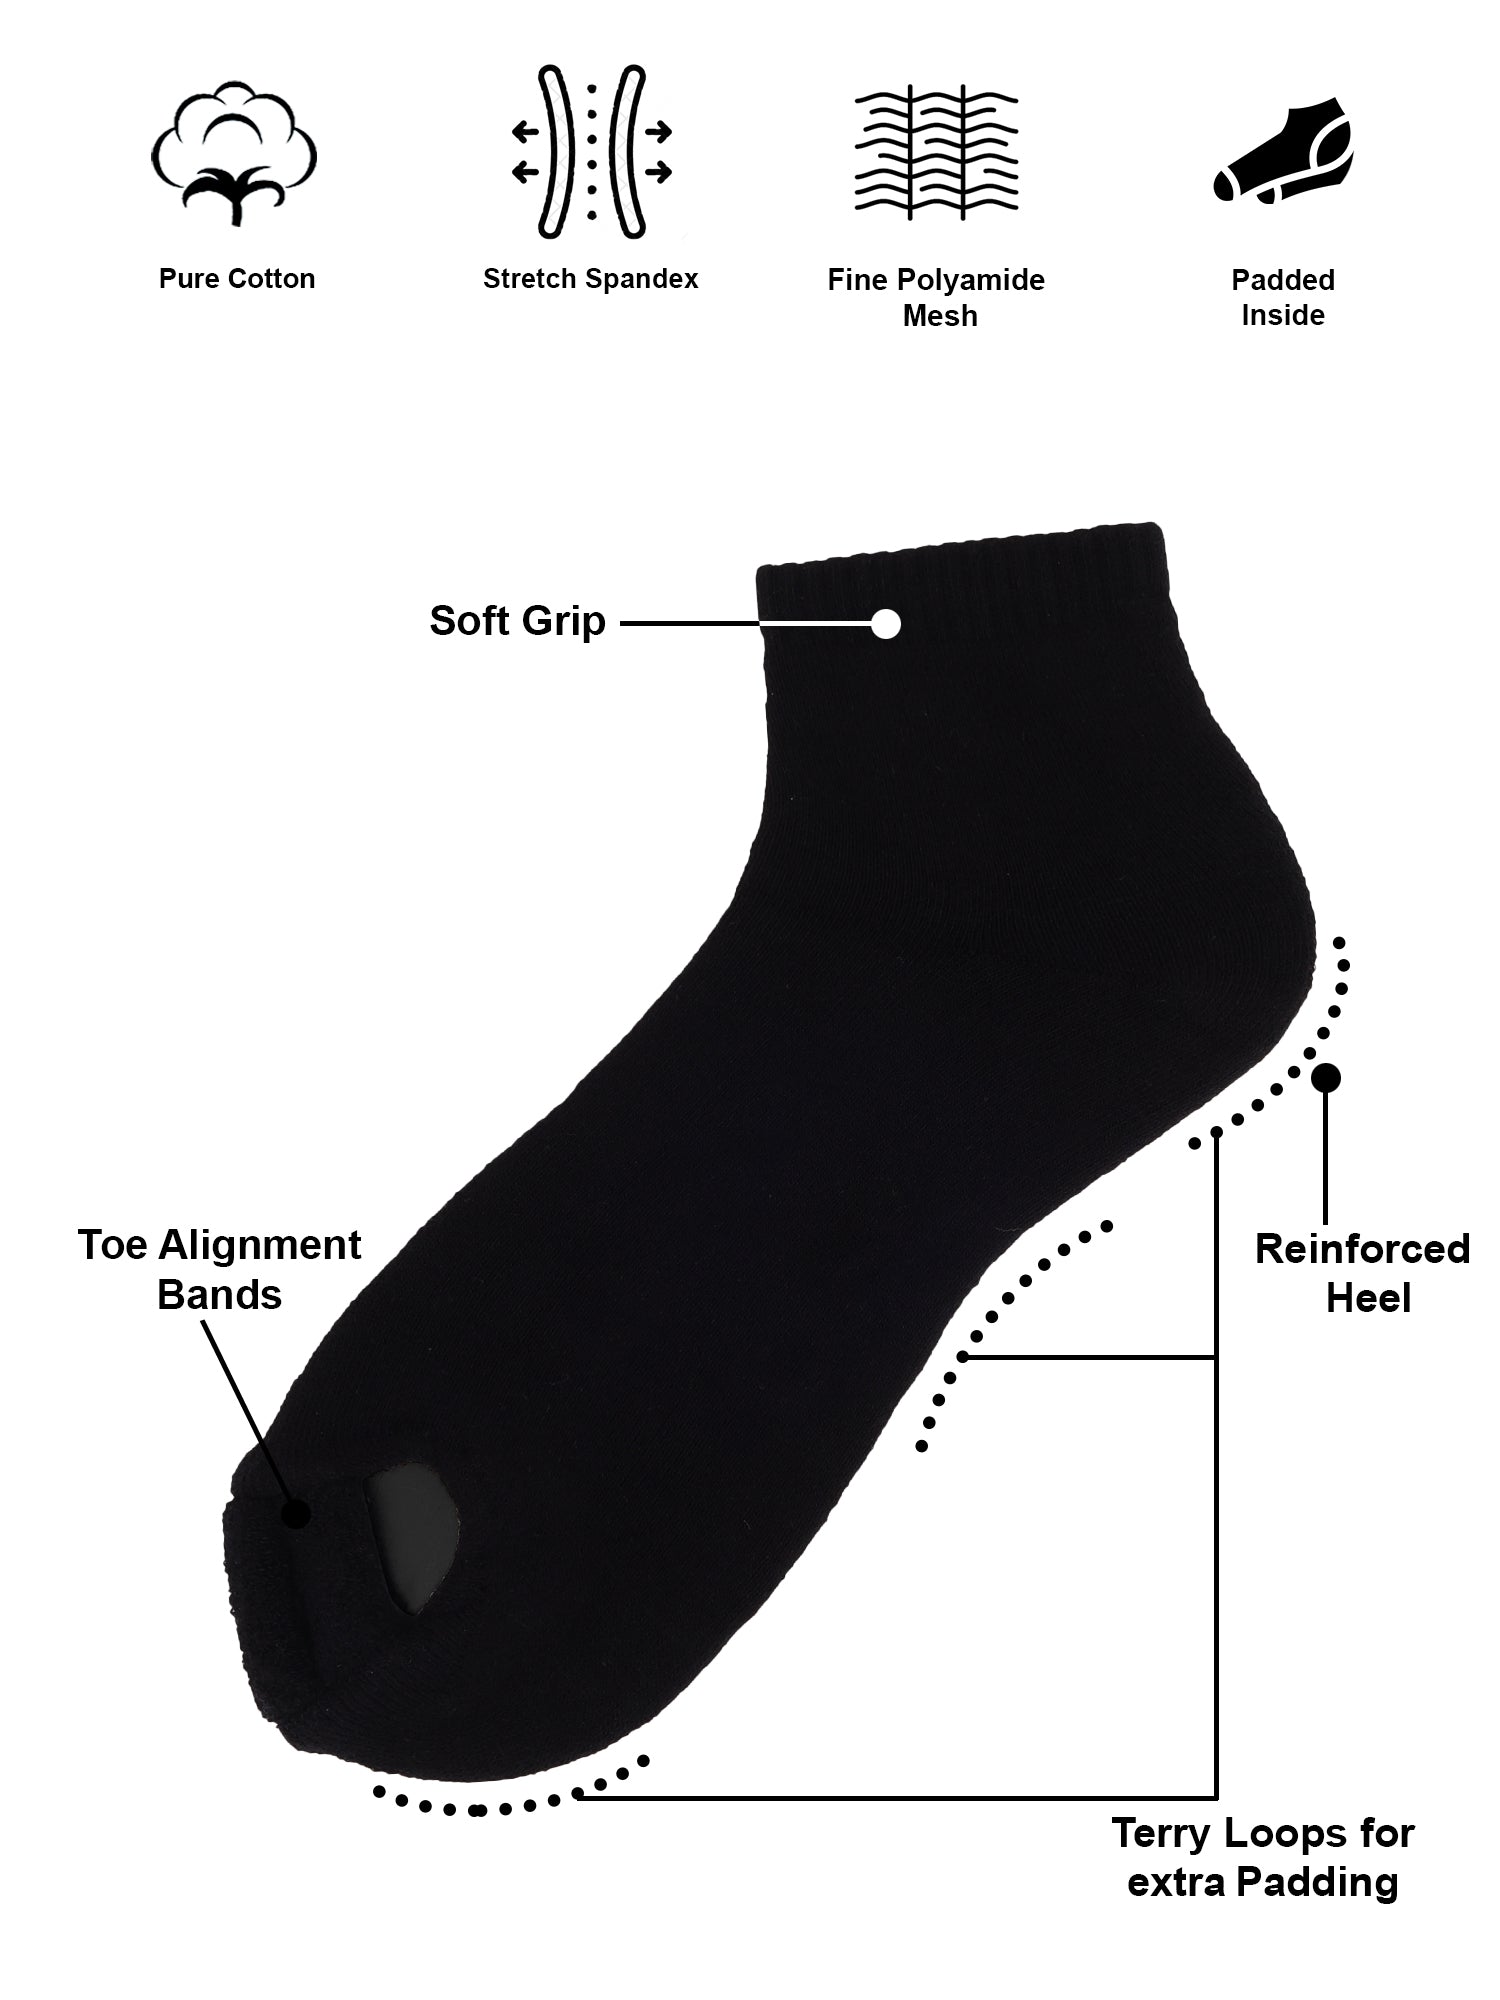 Foot alignment socks - The Original Foot Alignment Socks